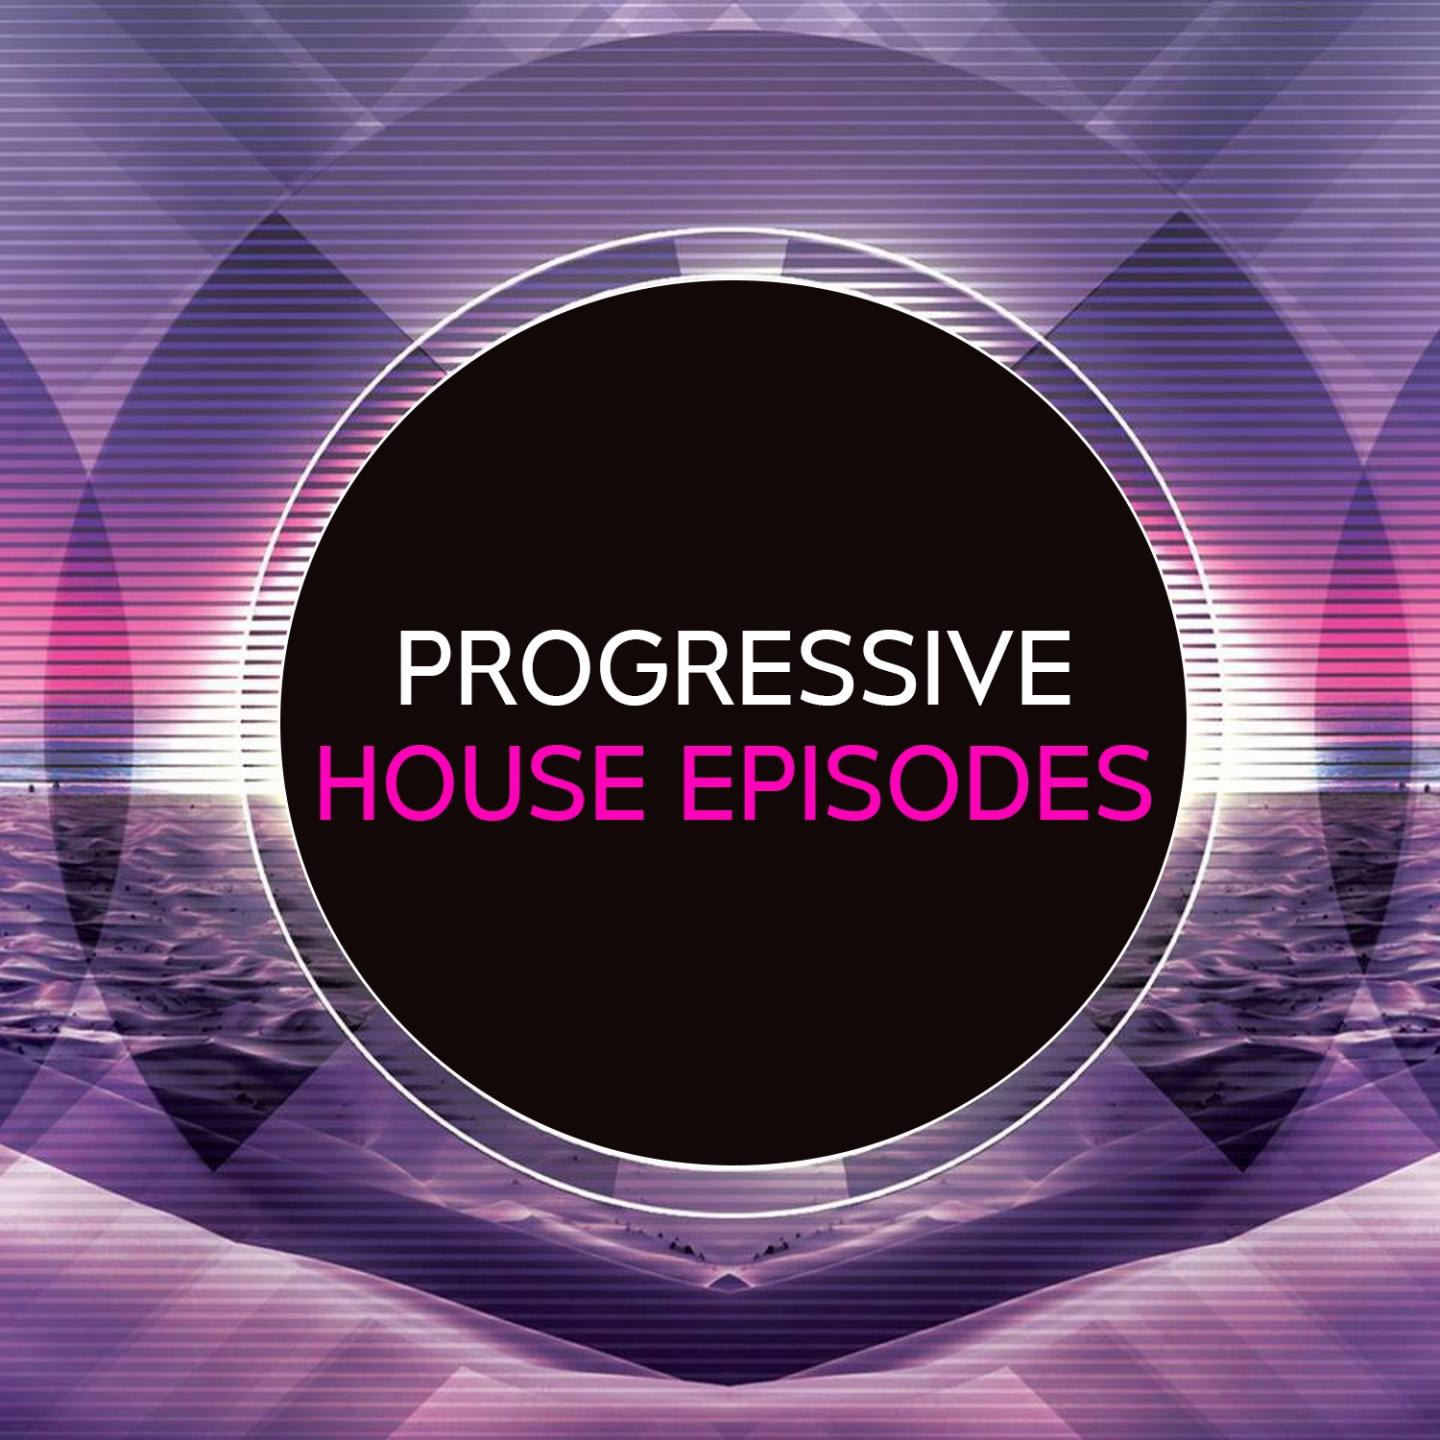 Progressive House Episodes